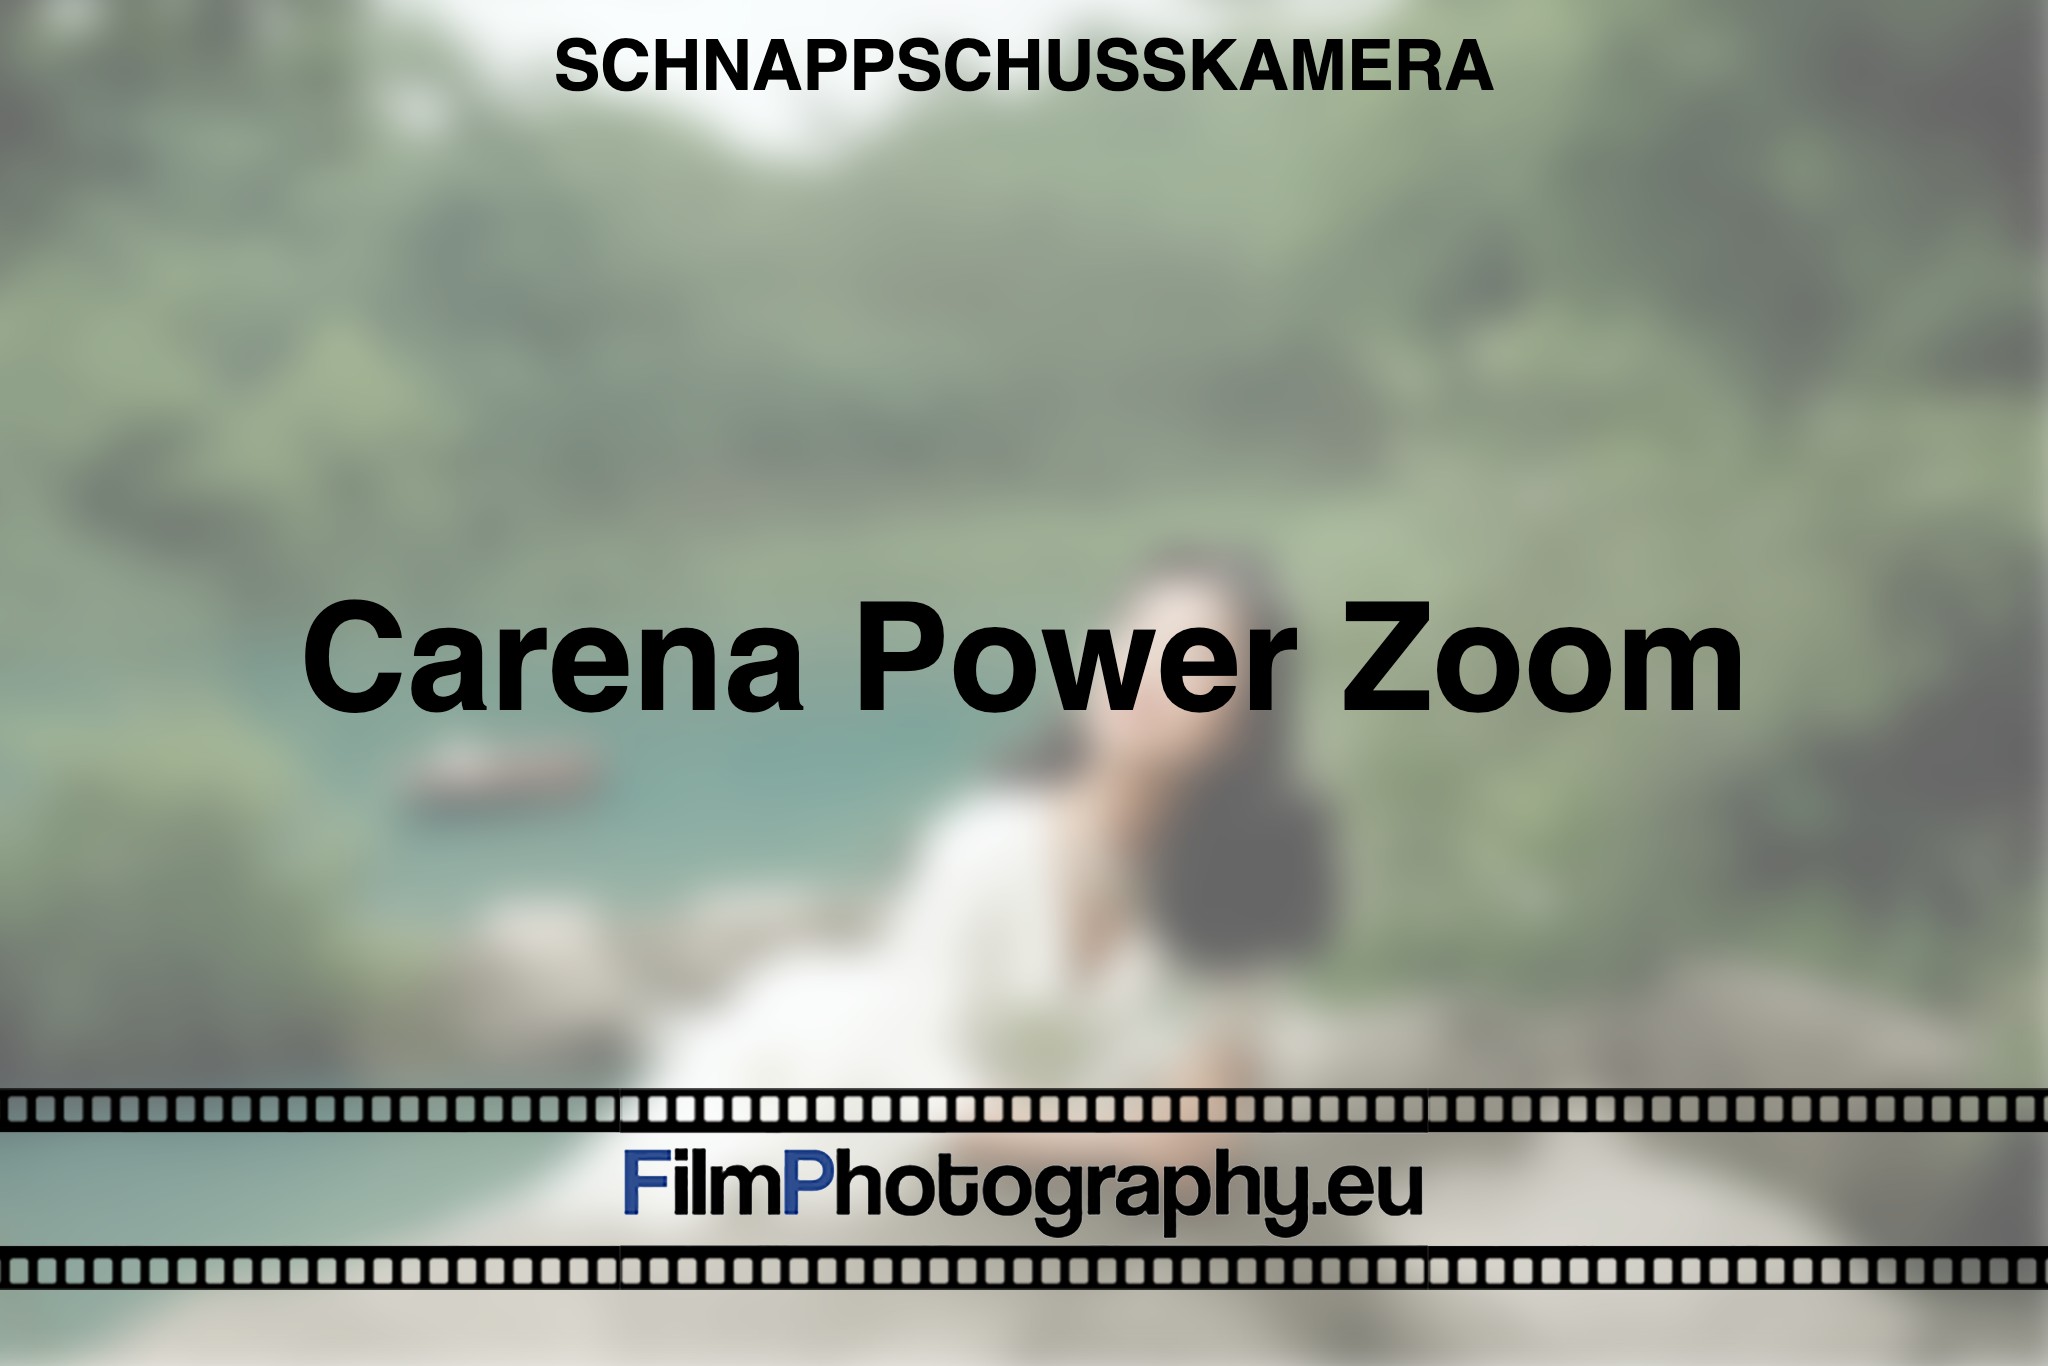 carena-power-zoom-schnappschusskamera-bnv